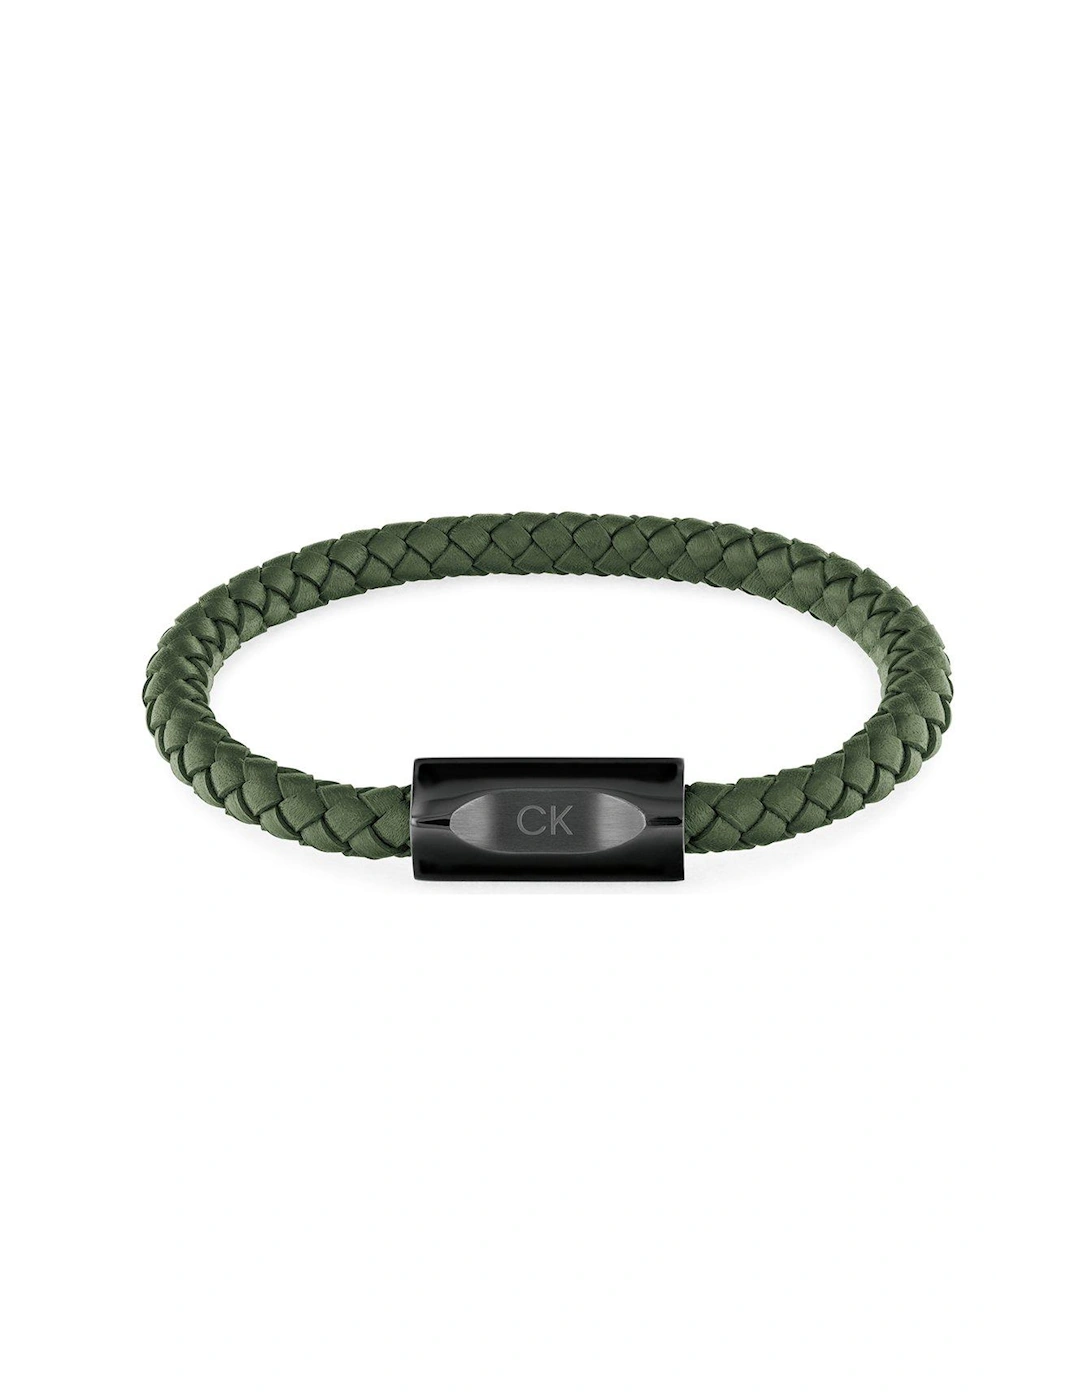 Men's black IP and green leather bracelet, 2 of 1